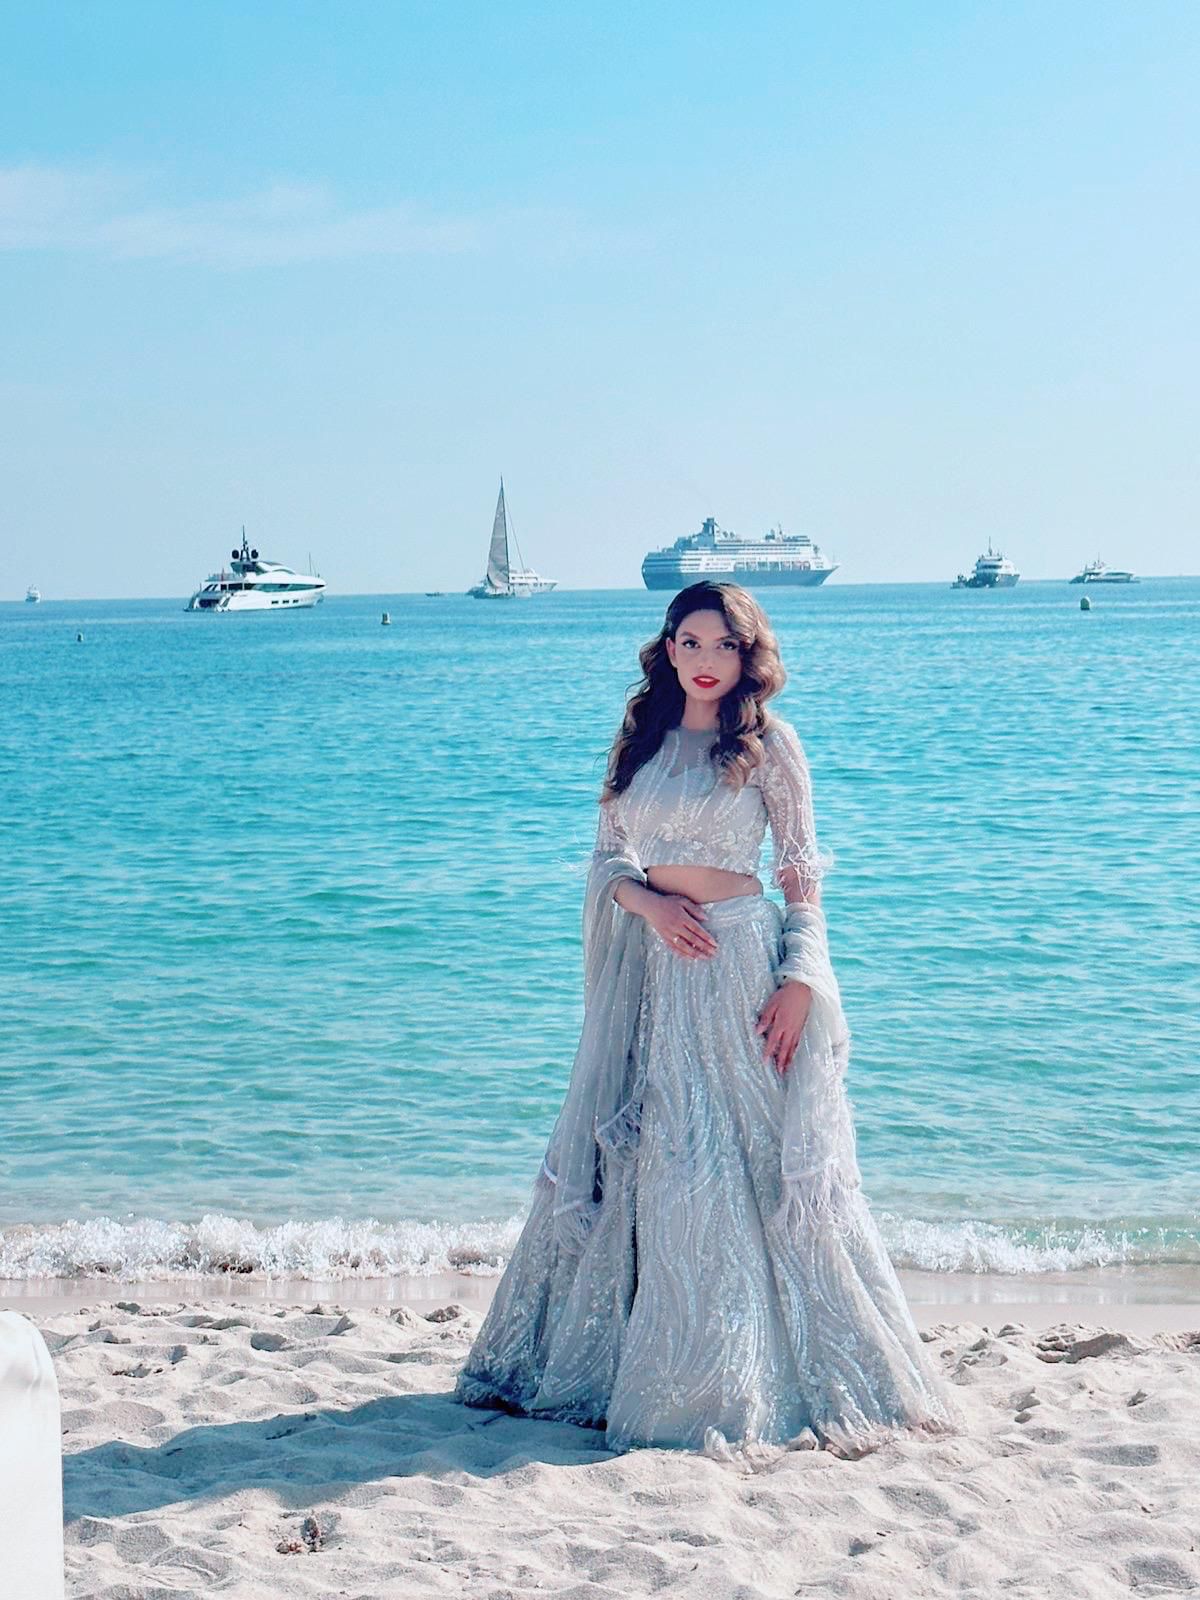 Shannon K Sanu Makes Our Heart Skip A Beat In Her Silver Lehenga By Actress-Designer Padmini Kolhapure’s Brand Padmasitaa